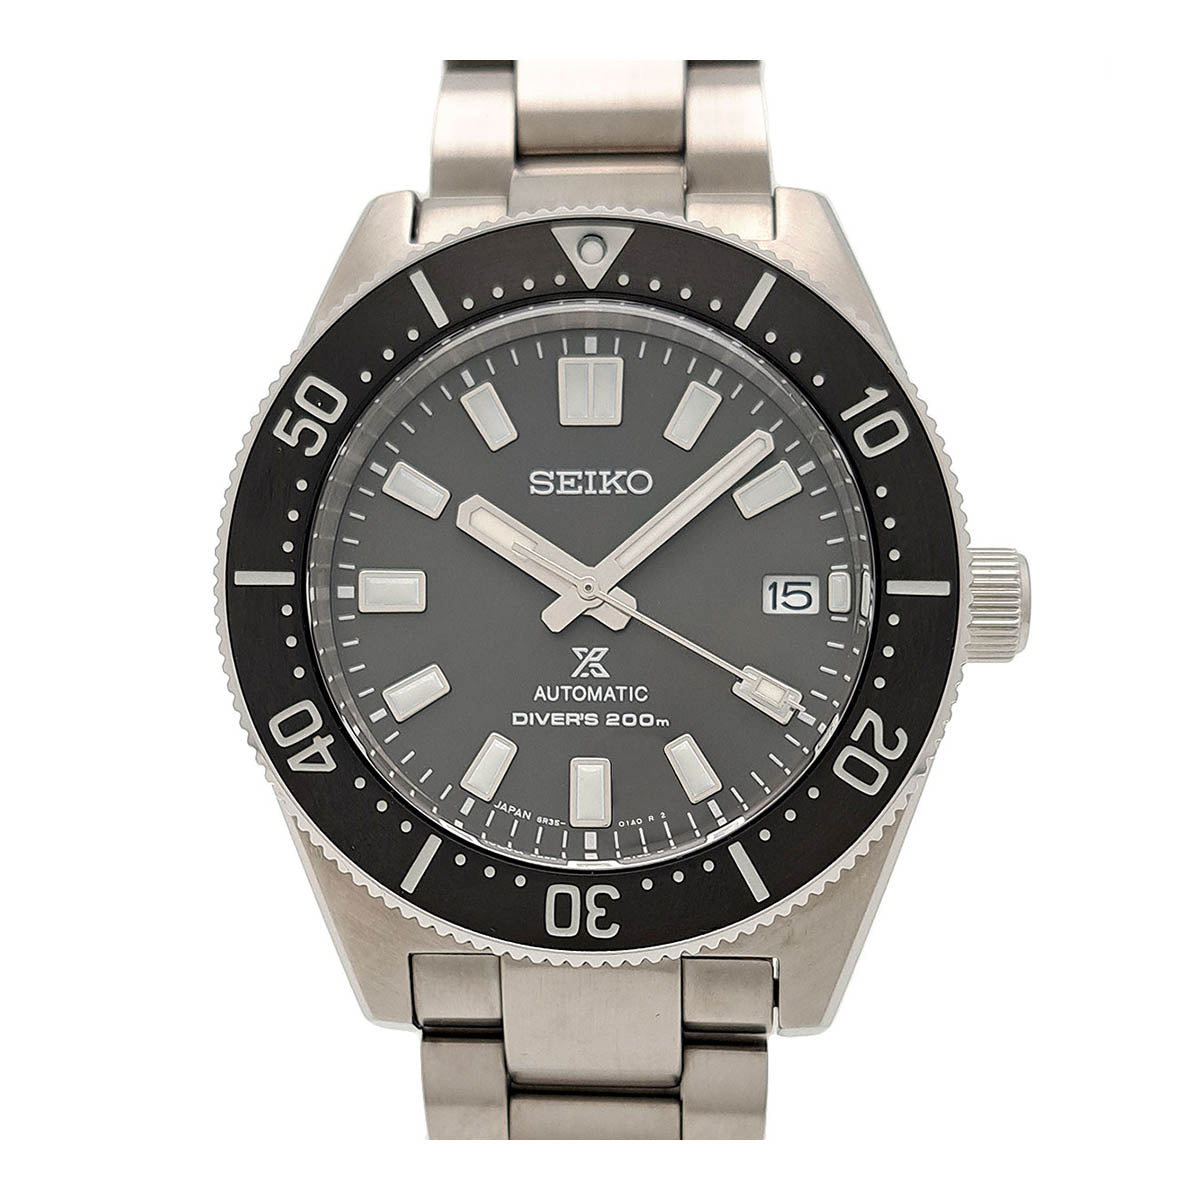 Seiko "Prospex SBDC101" Men's Automatic Wristwatch in Stainless Steel SBDC101